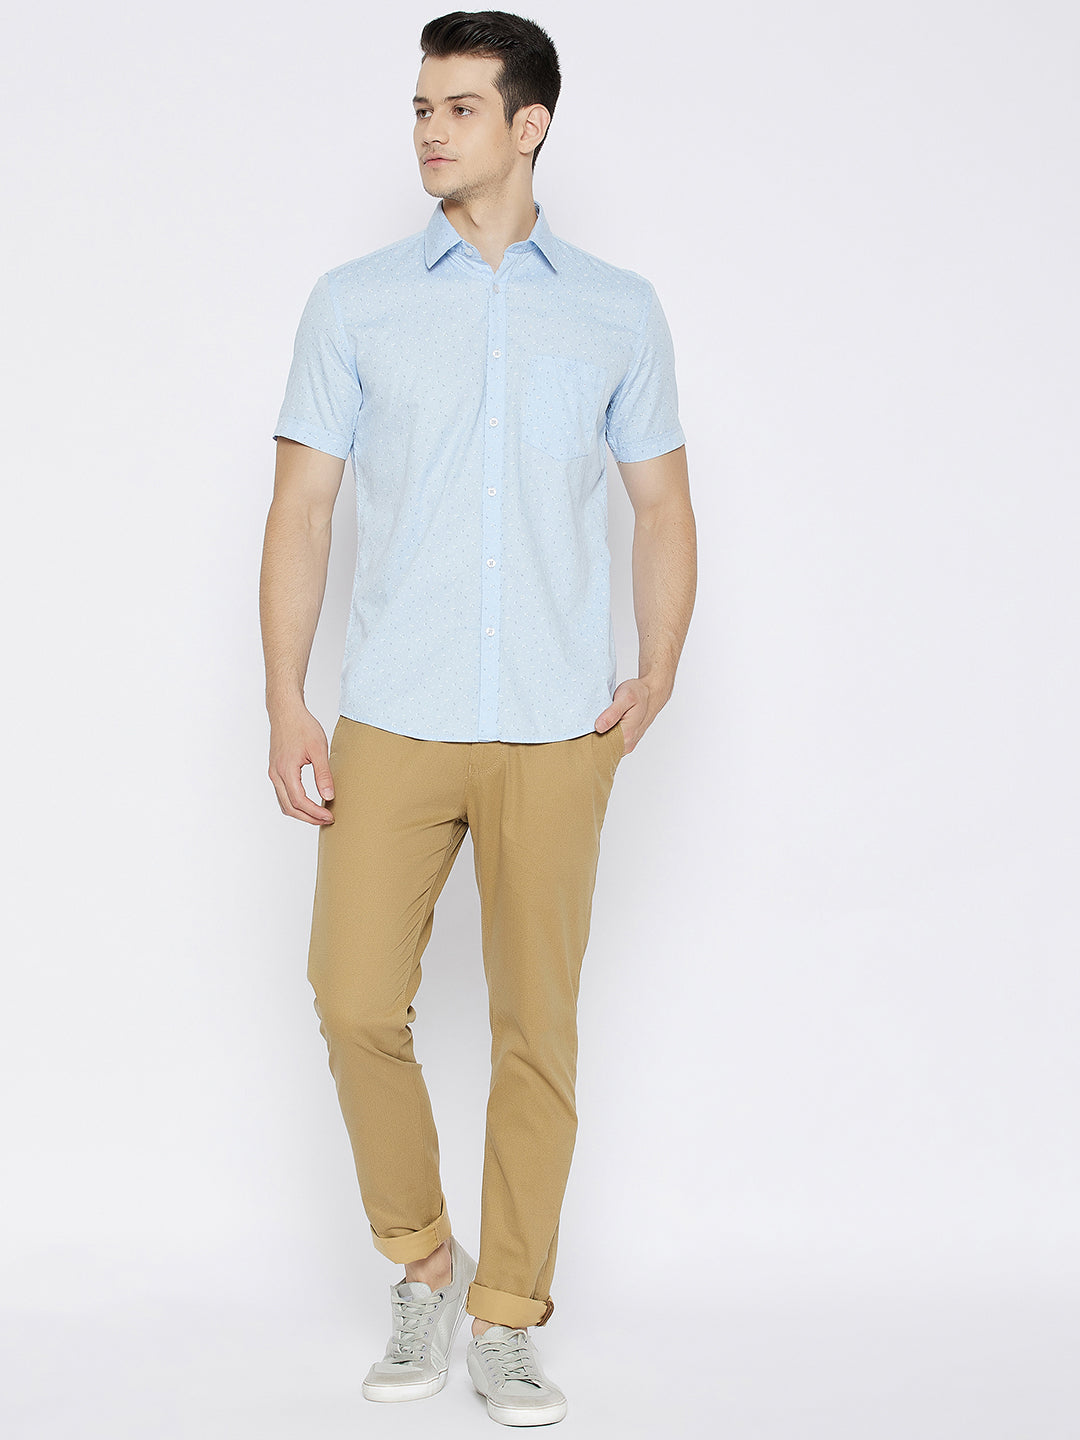 Blue Printed Slim Fit shirt - Men Shirts